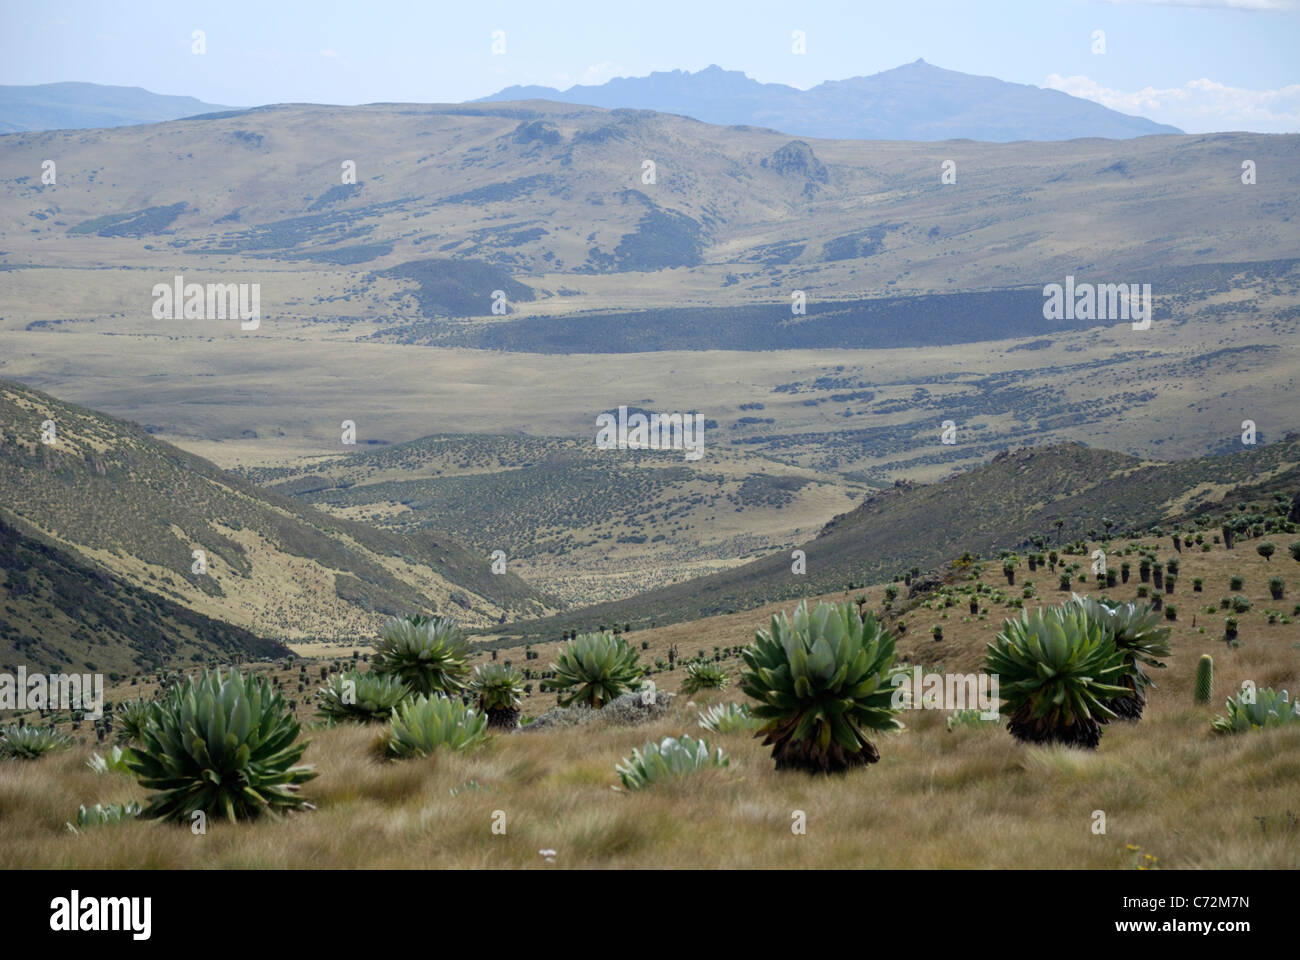 Mountain landscape, Aberdare National Park, Kenya Stock Photo